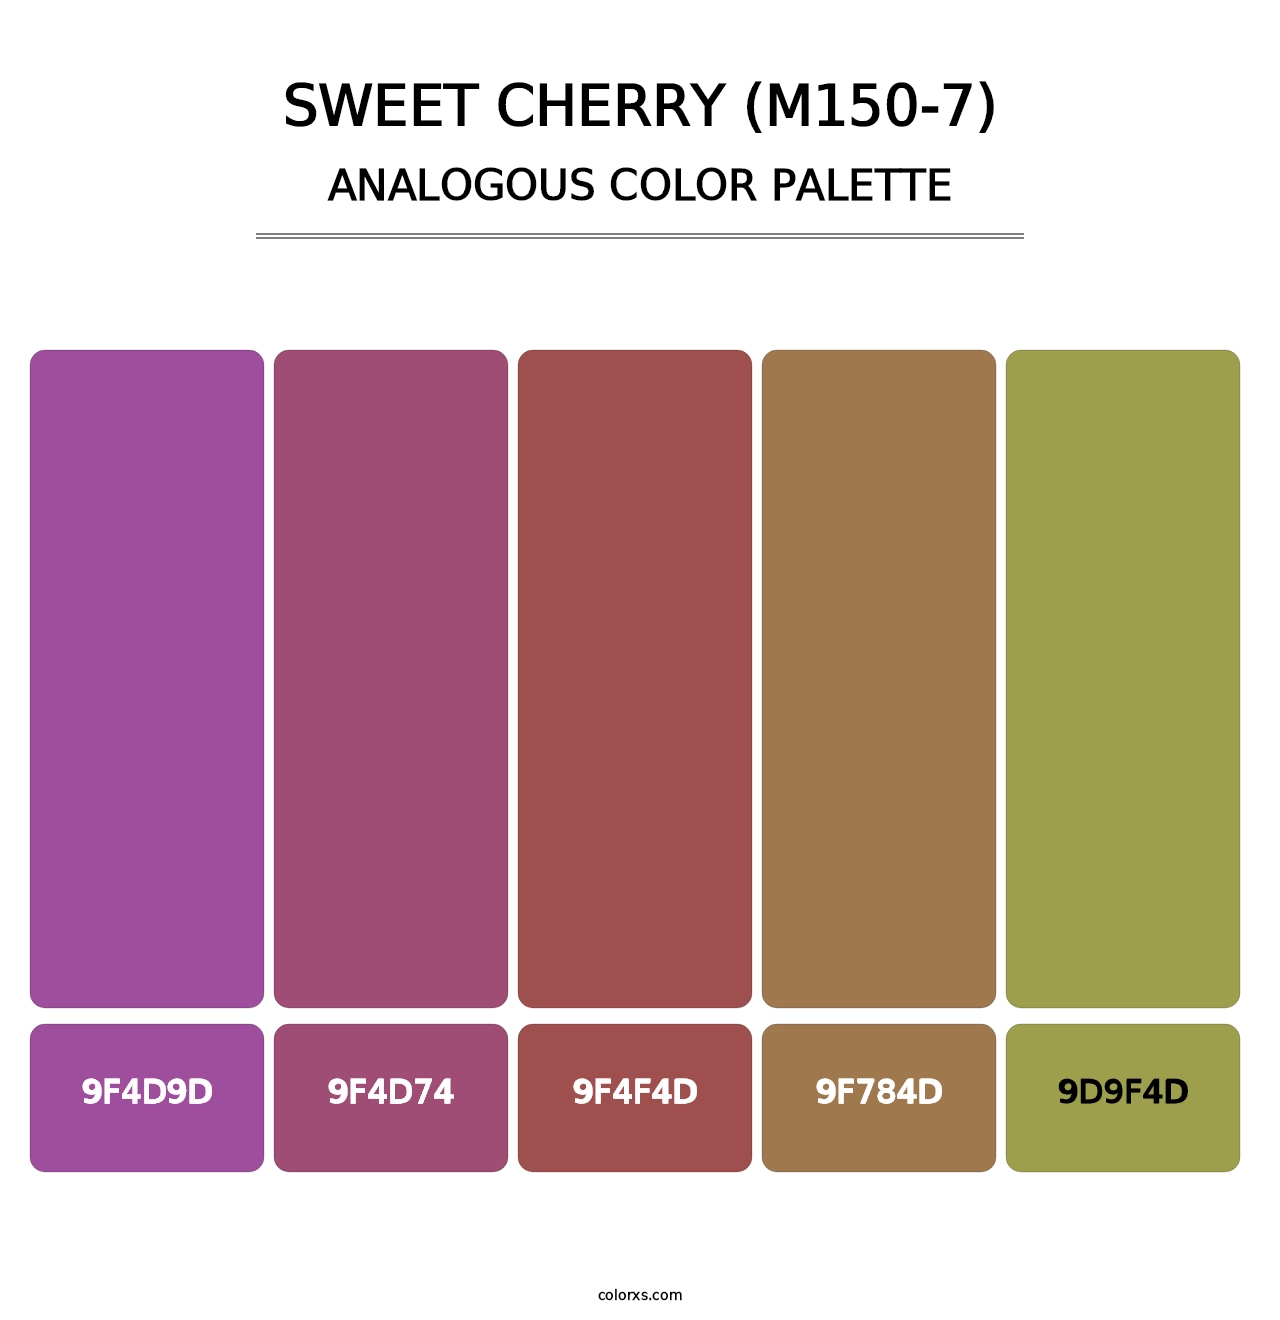 Sweet Cherry (M150-7) - Analogous Color Palette